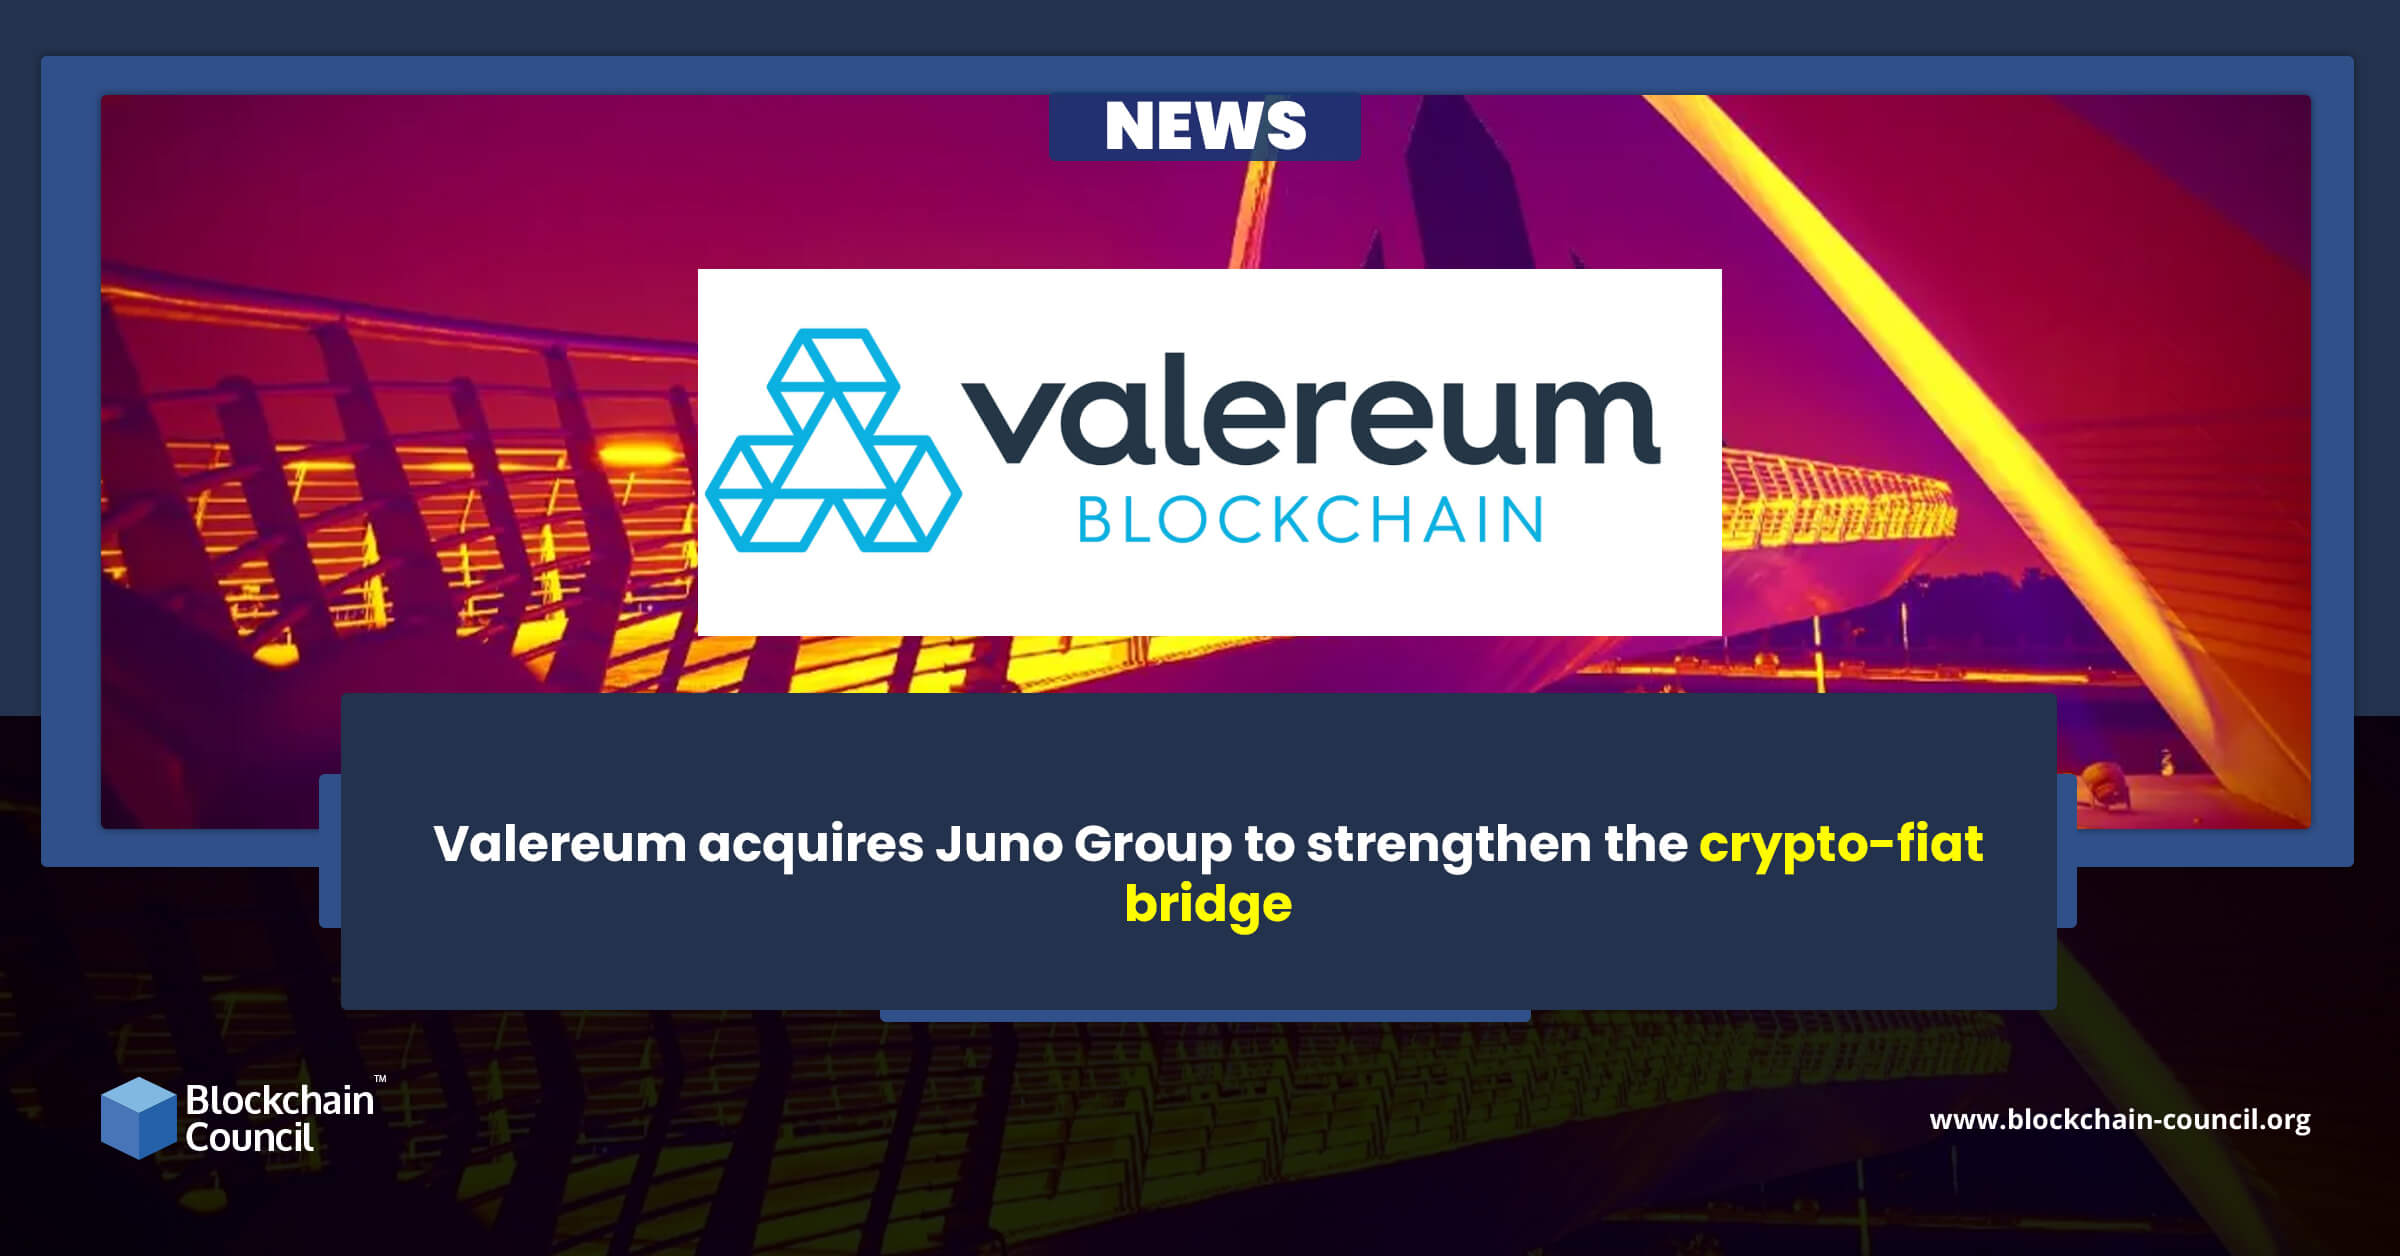 Valereum acquires Juno Group to strengthen the crypto-fiat bridge